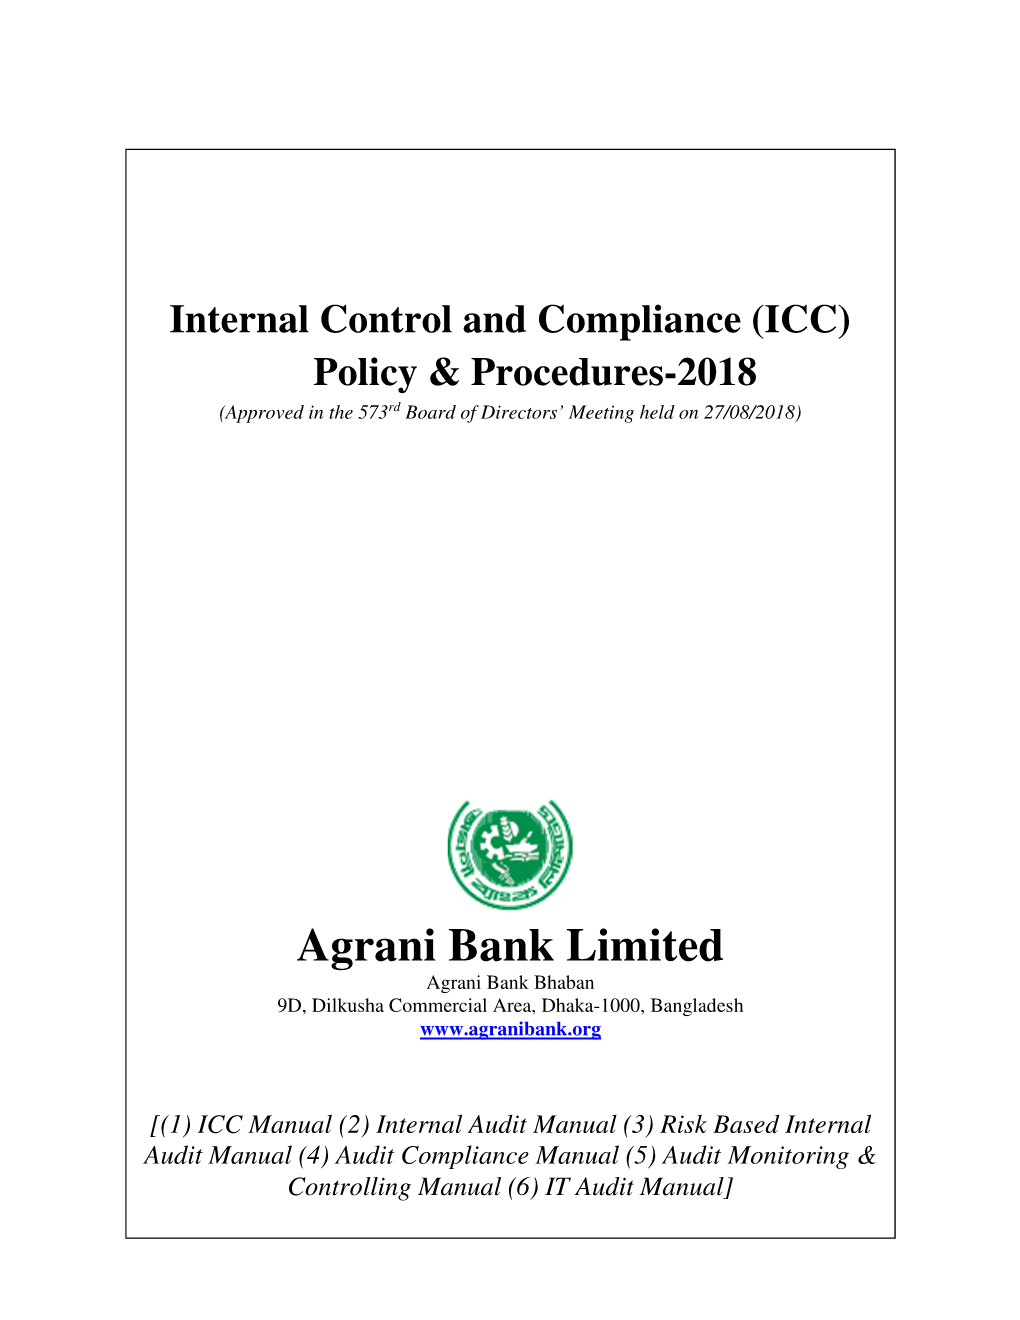 Internal Control & Compliance